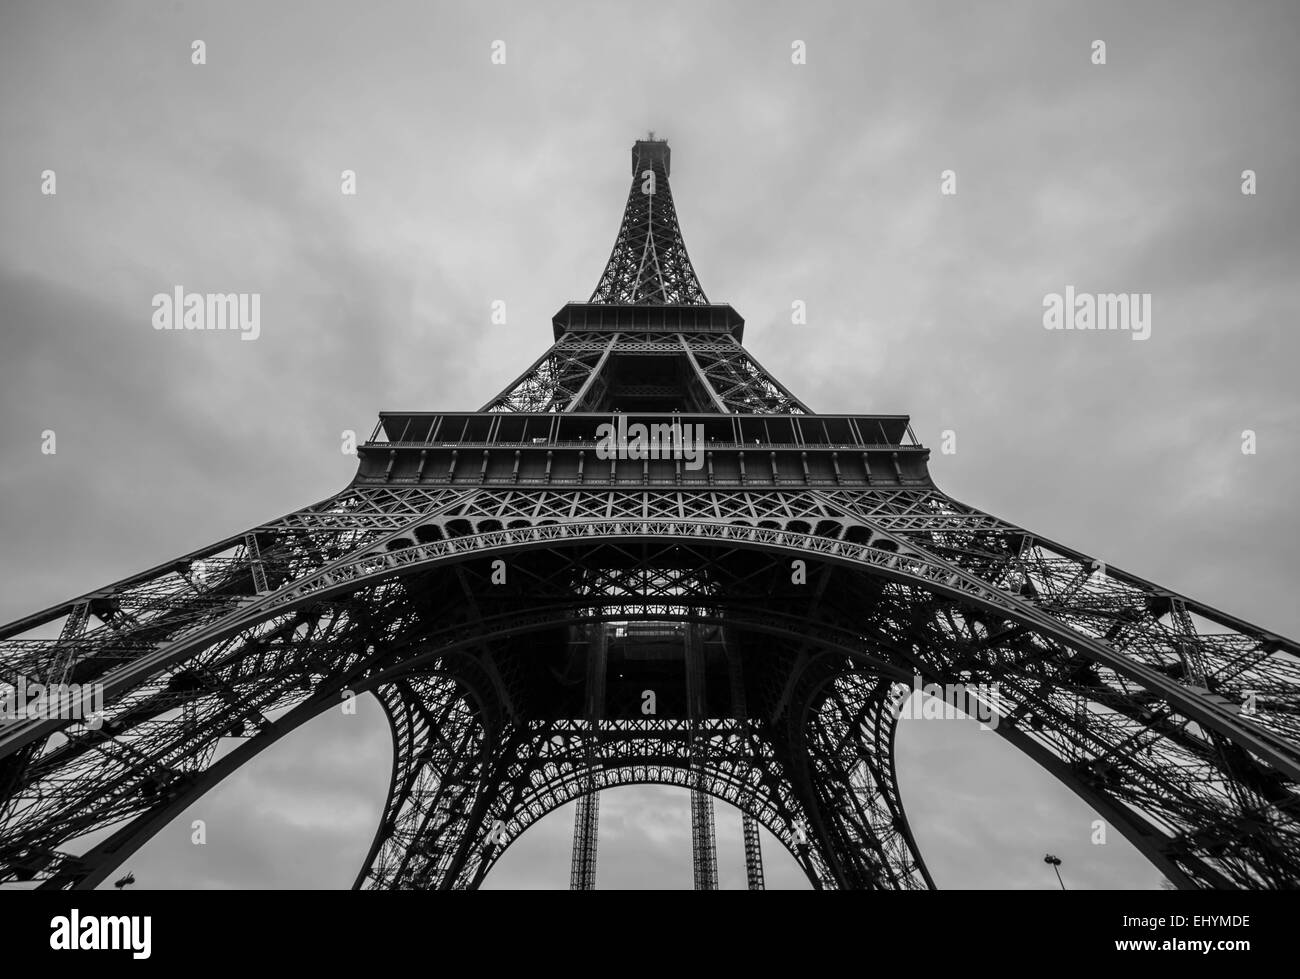 Low angle view of Eiffel Tower, Paris, France Banque D'Images